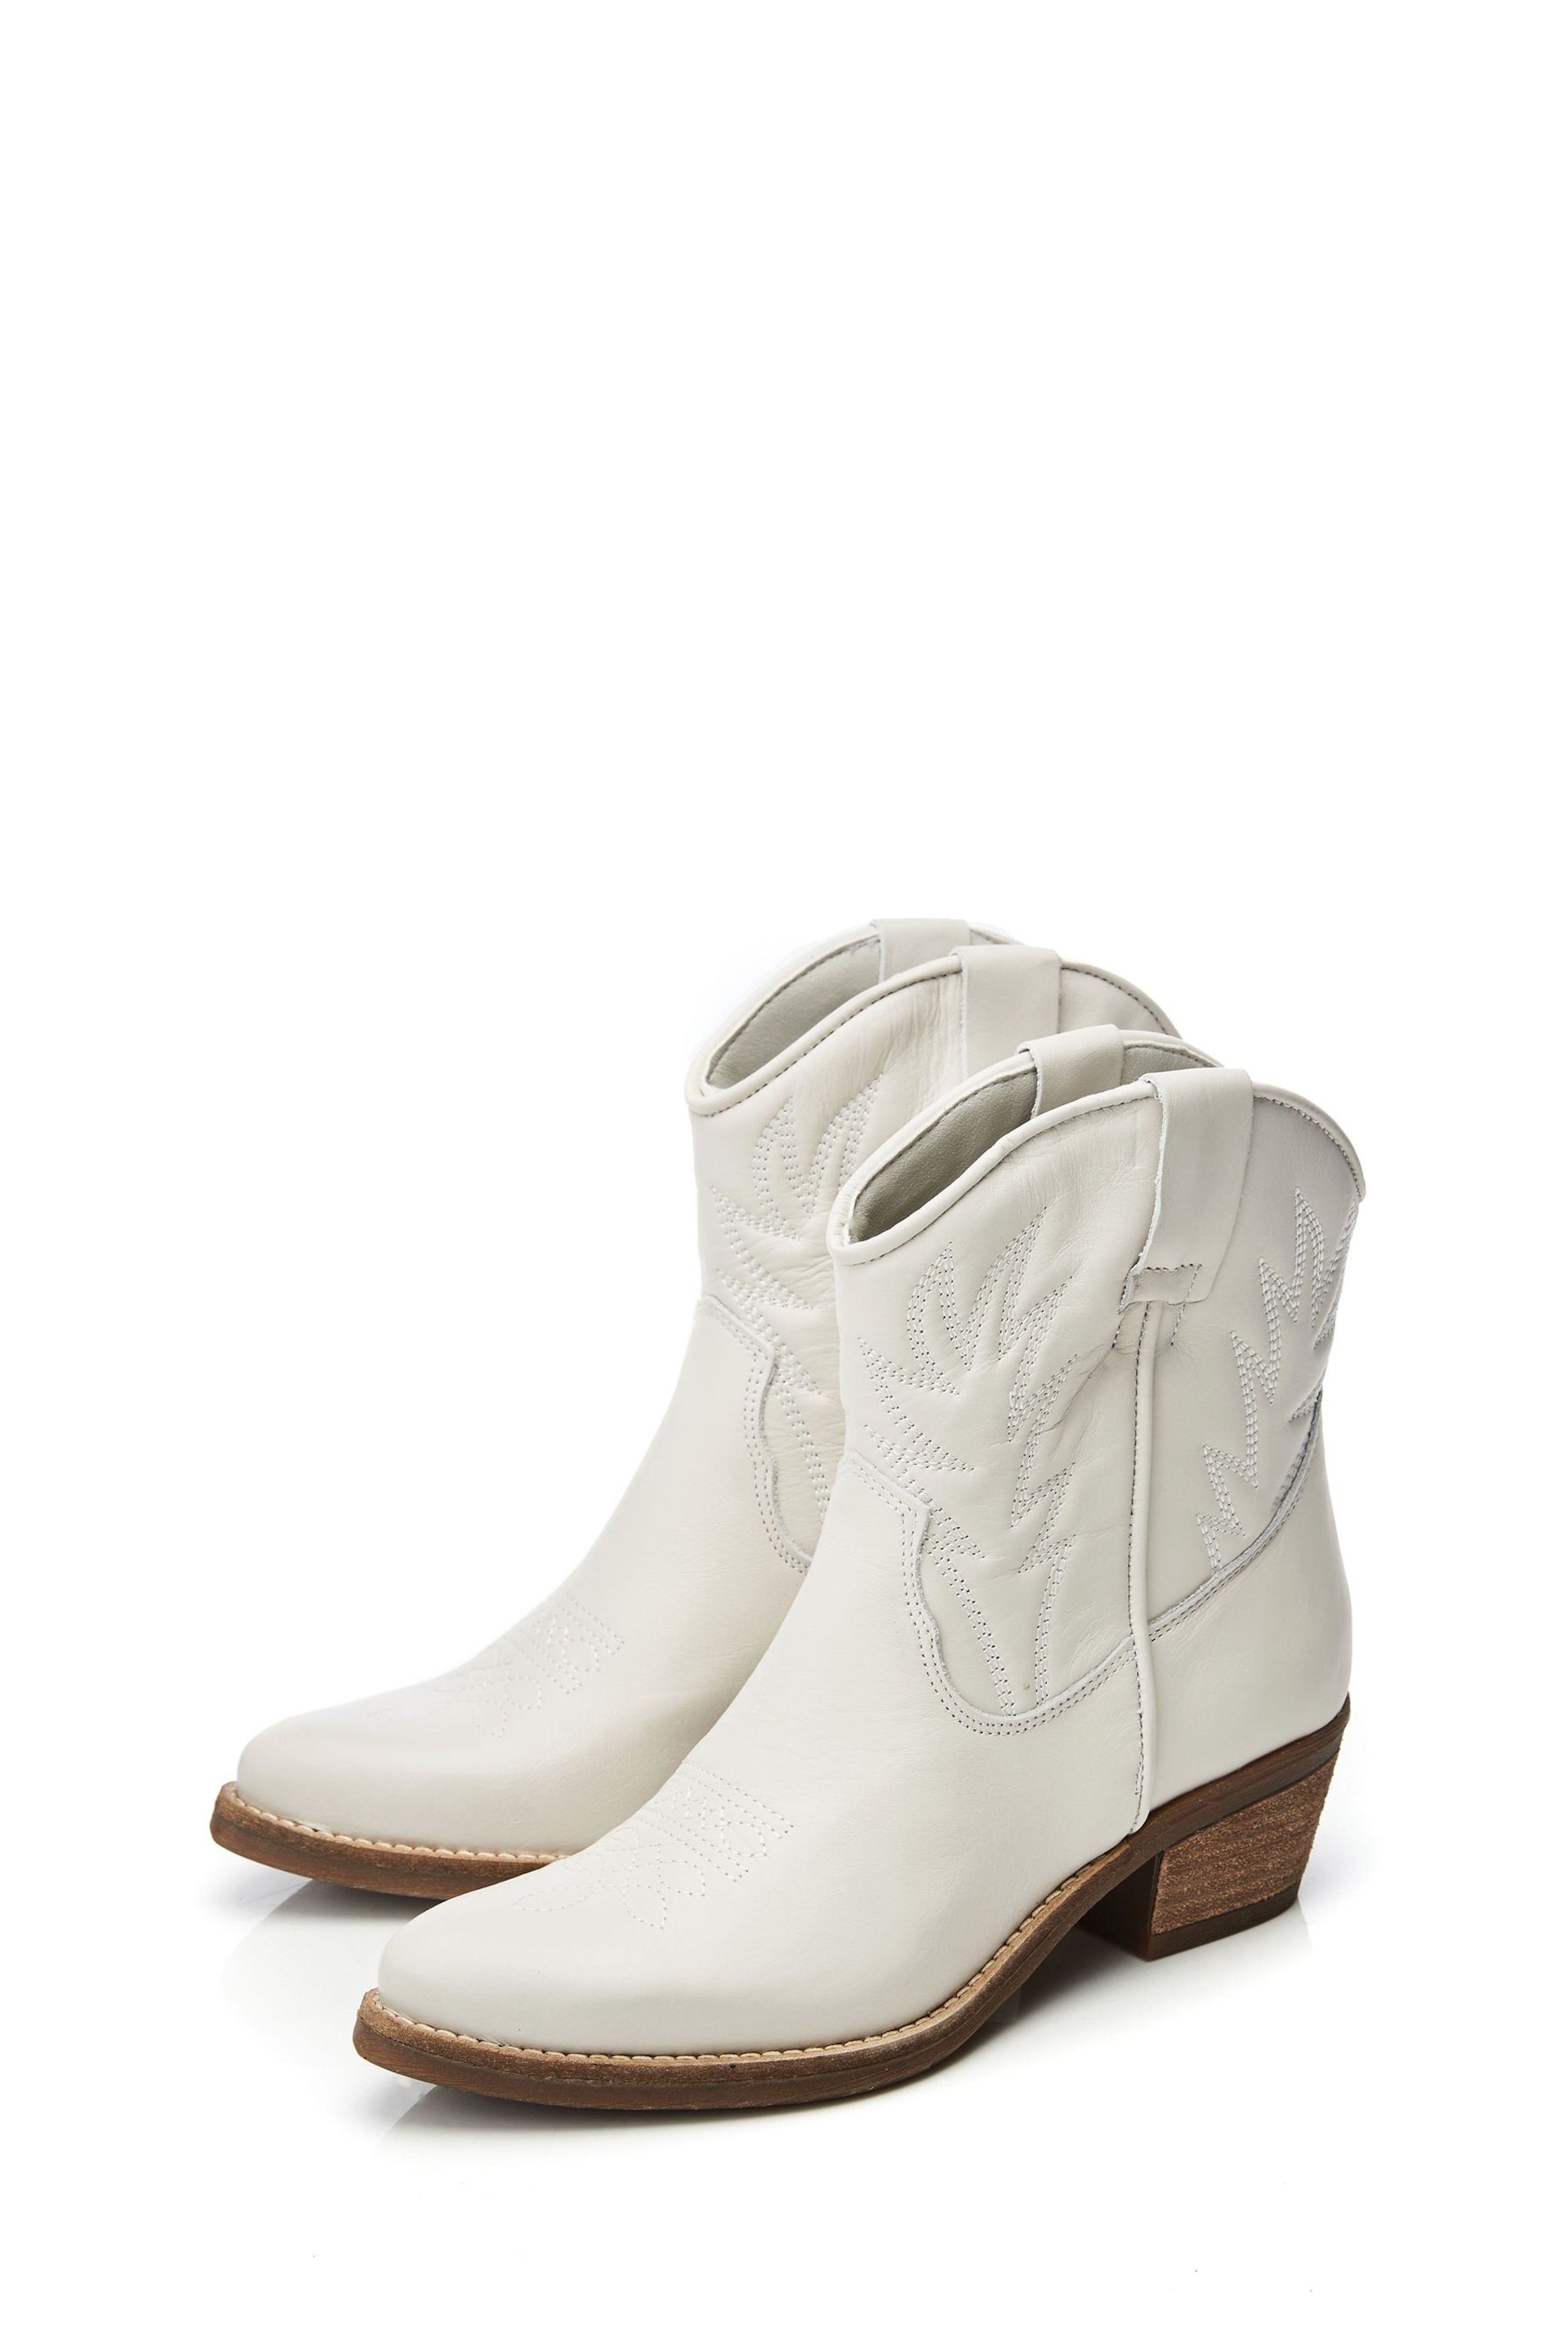 Moda in Pelle Bettsie Ankle Western White Boots - Image 3 of 5